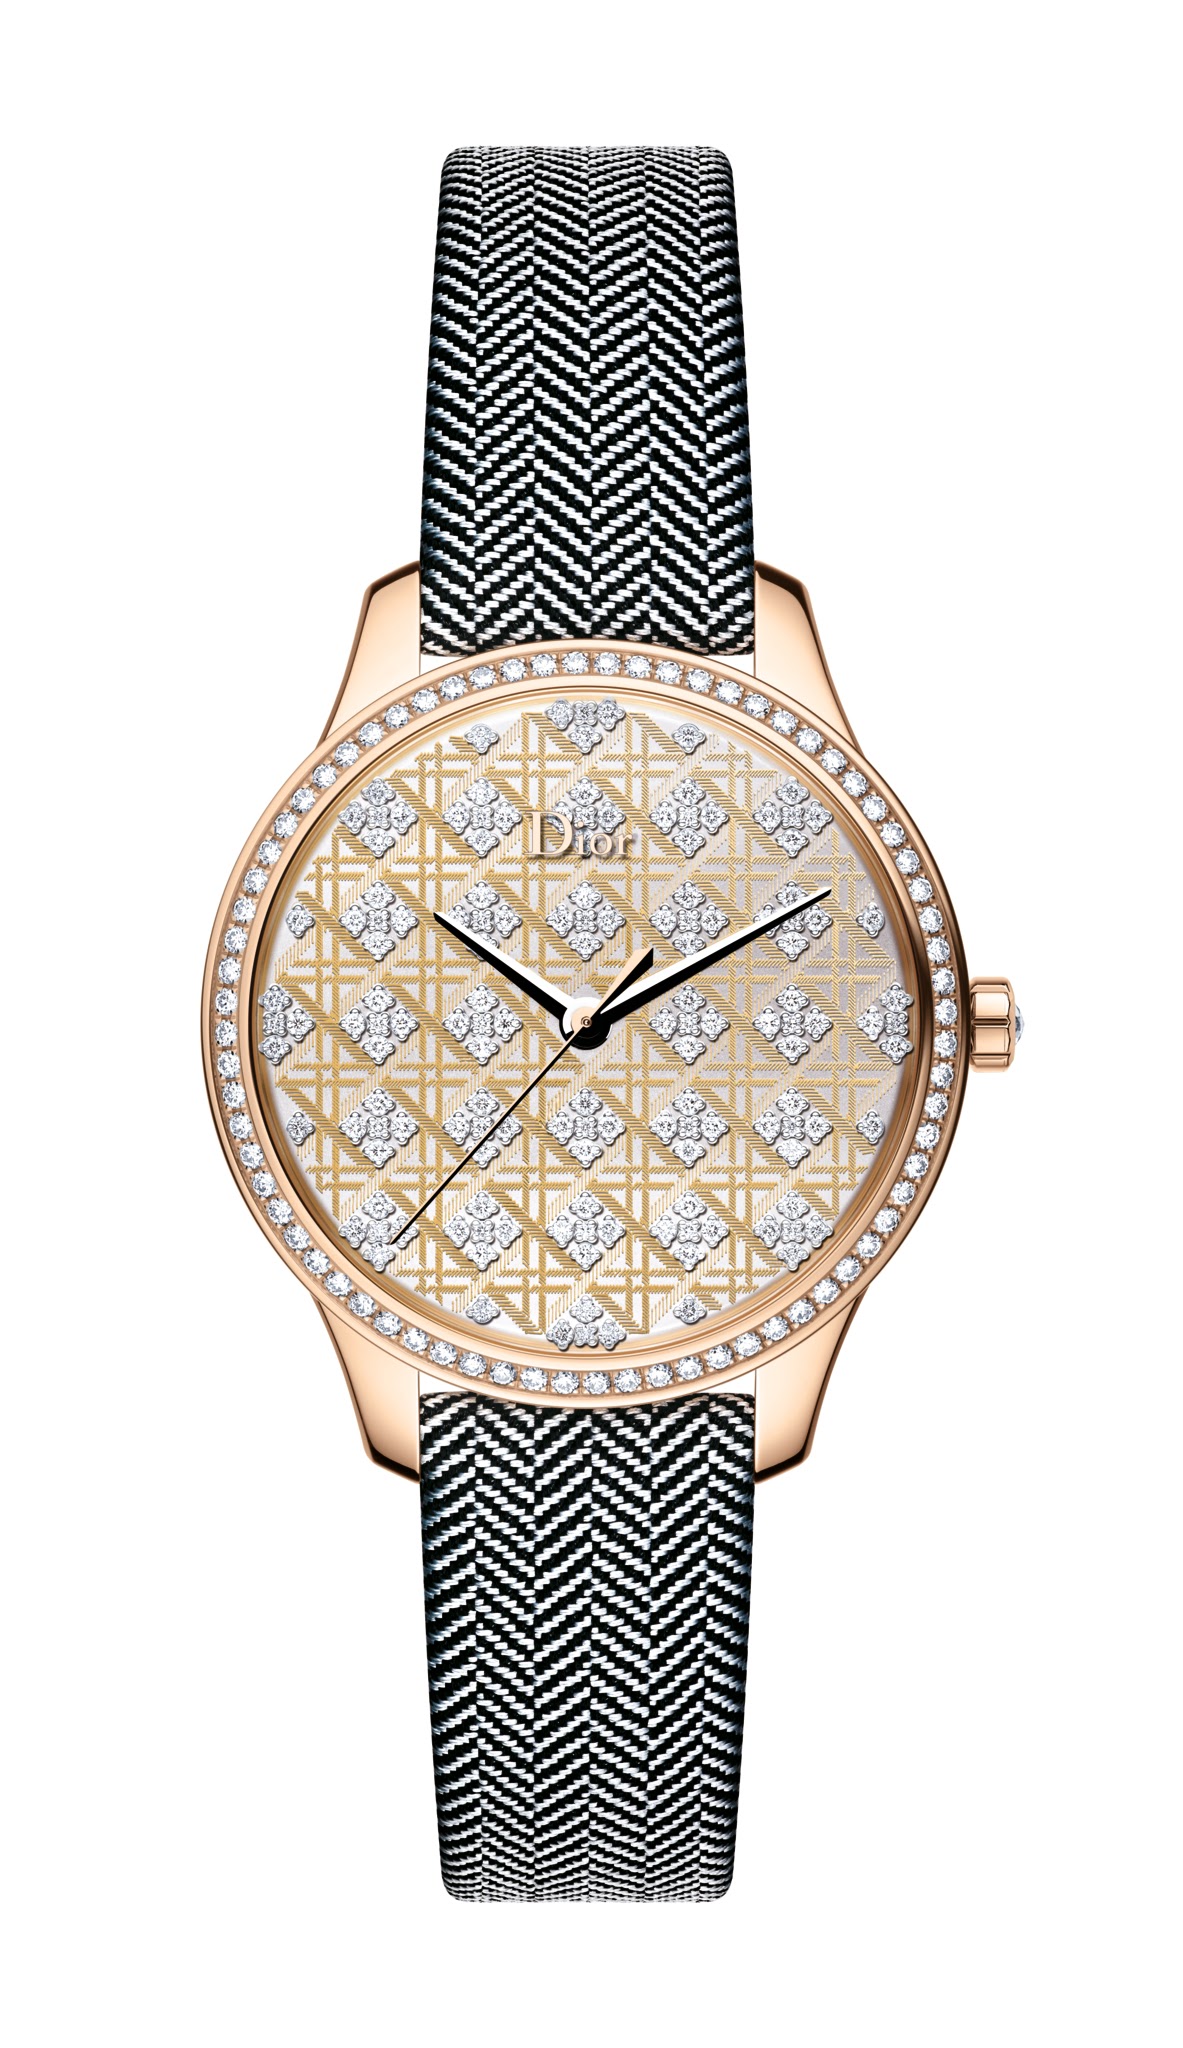 Dior's VIII Montaigne Tissage Précieux Limited Edition Timepiece